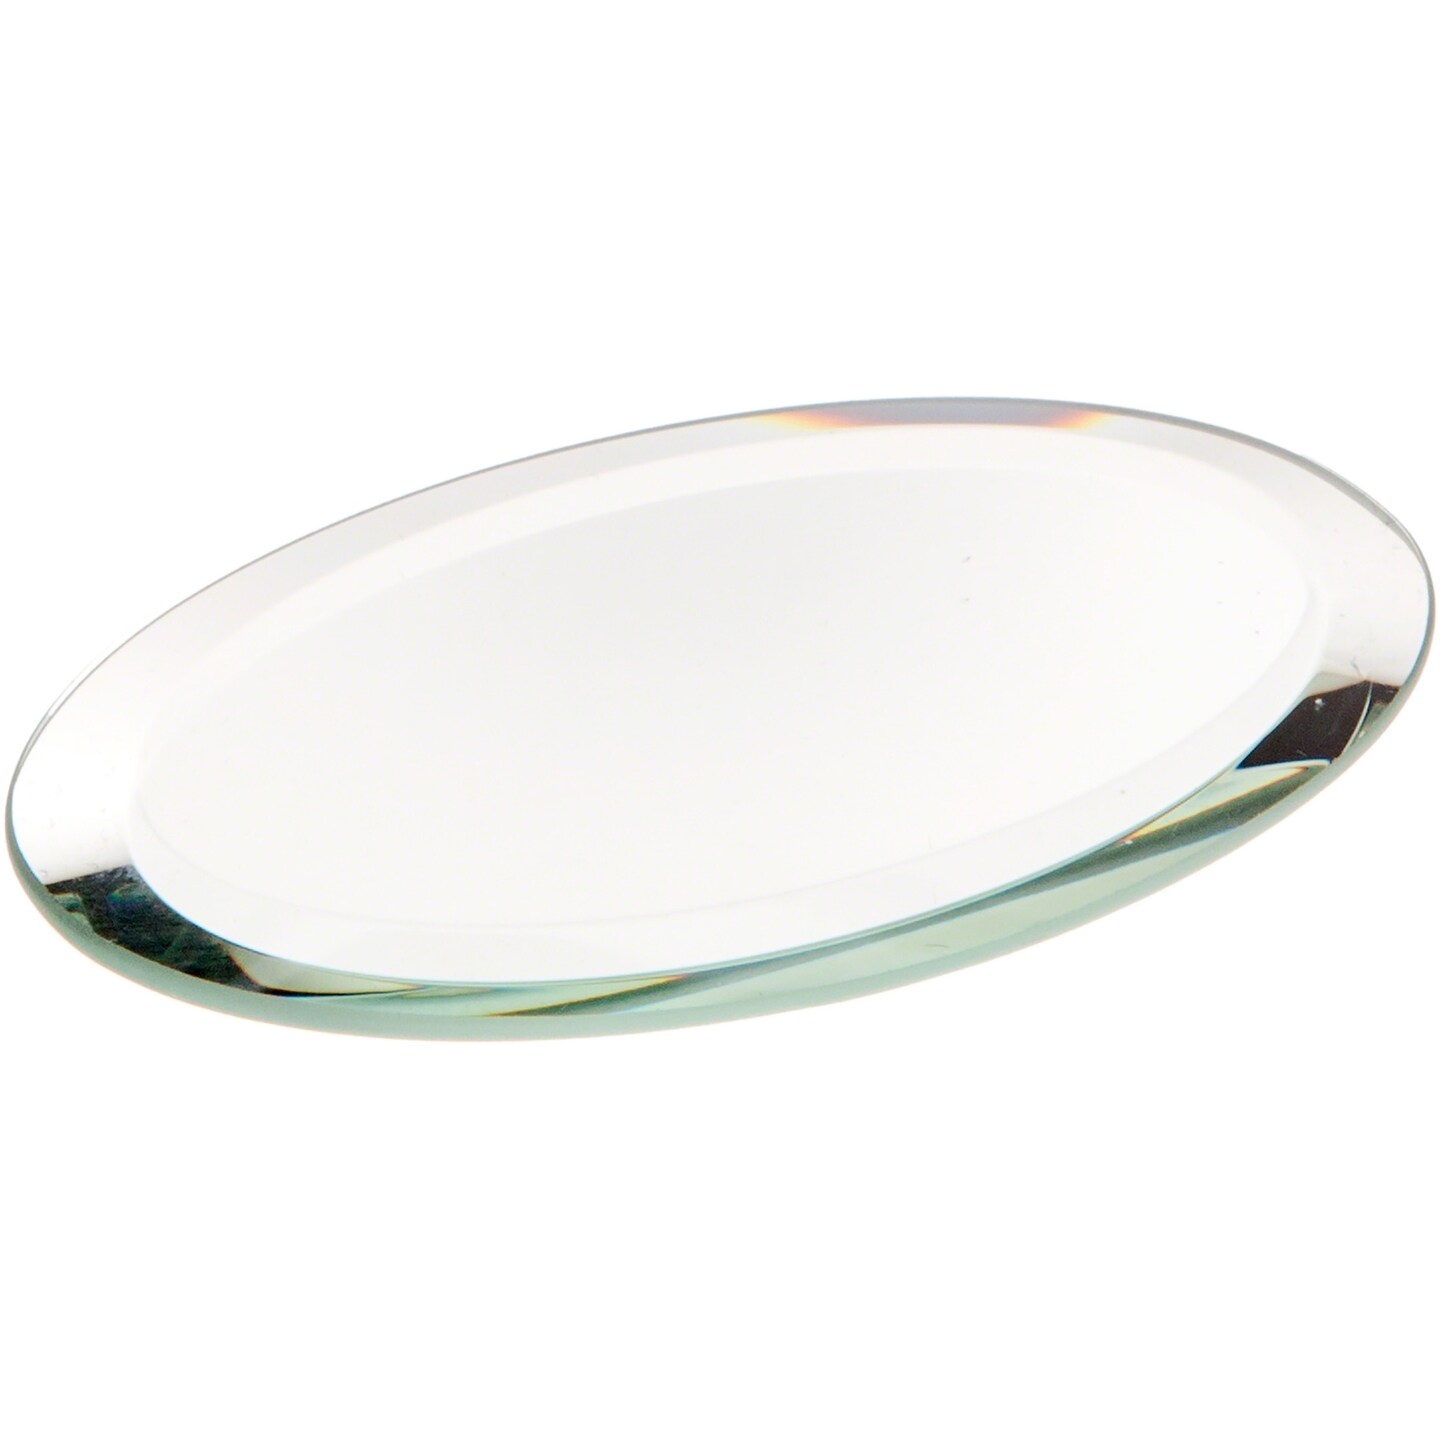 Plymor Oval 3mm Beveled Glass Mirror, 2 inch x 3 inch